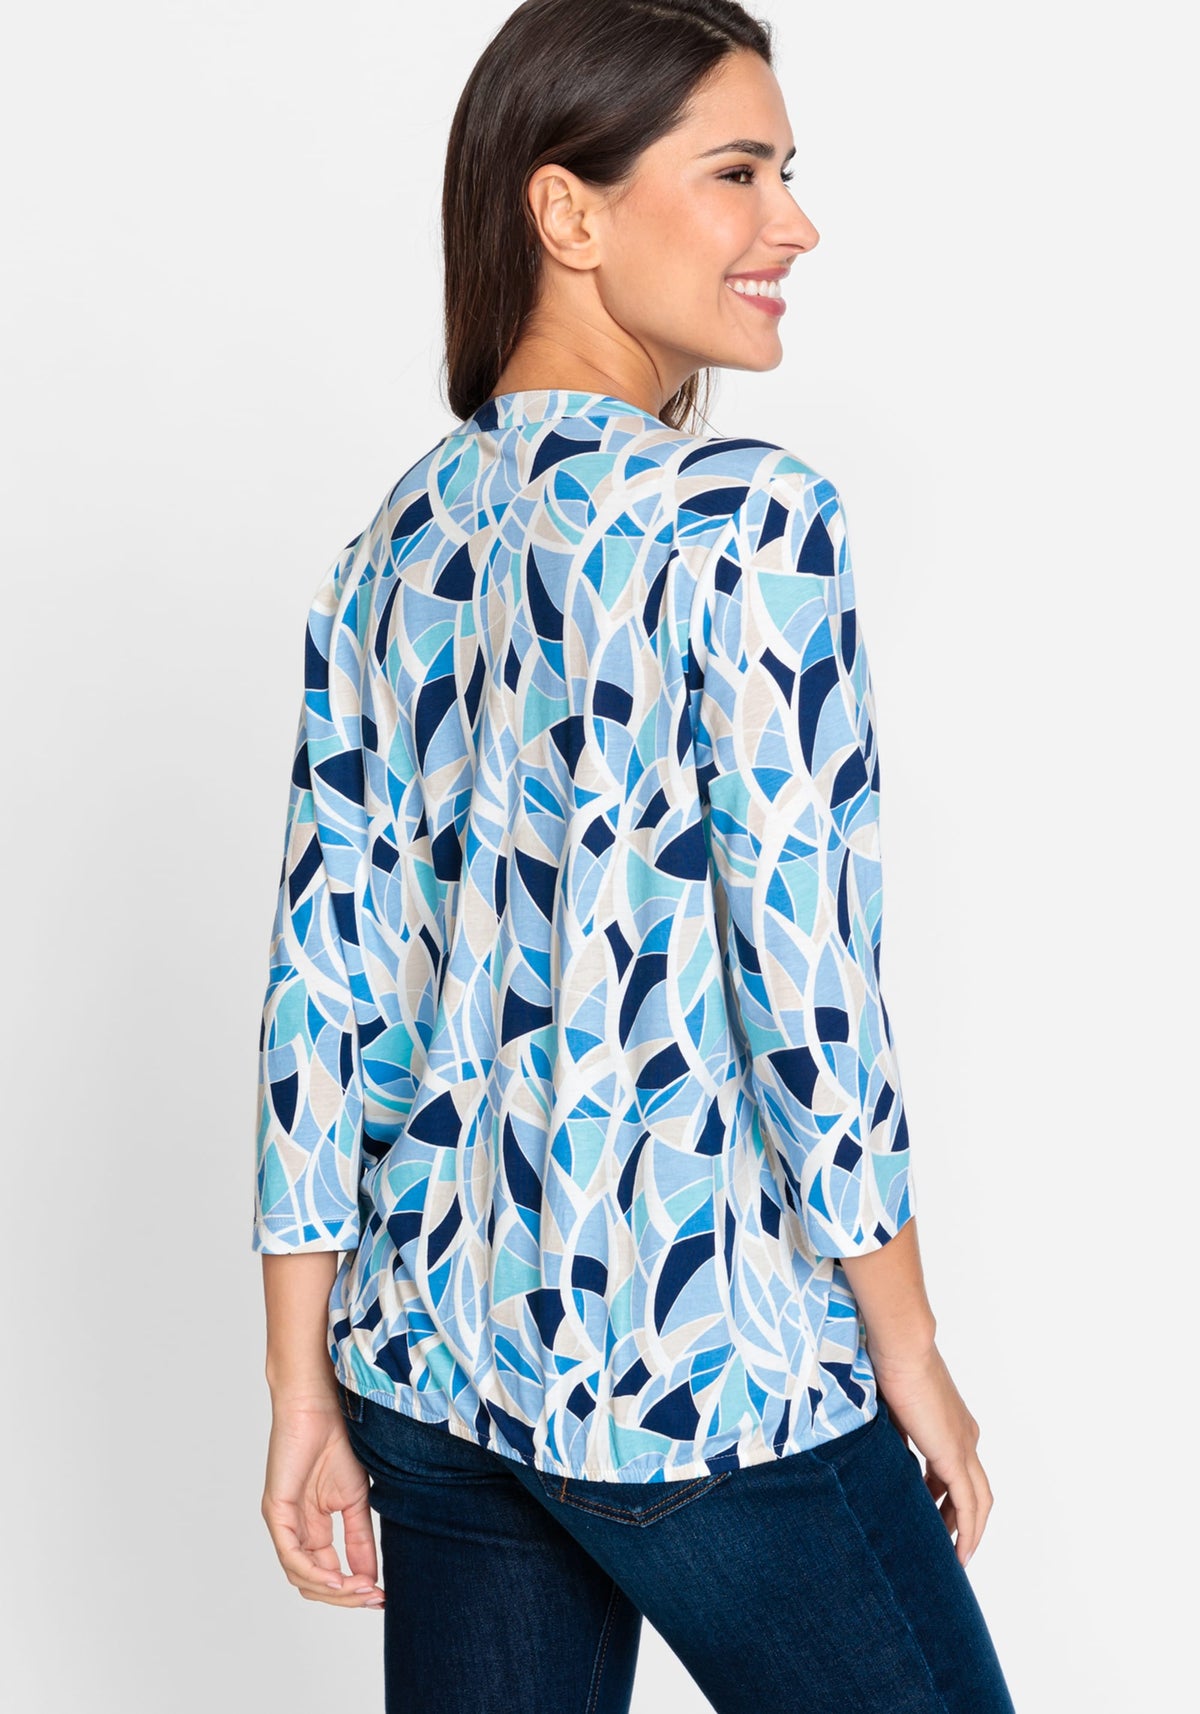 Cotton Blend 3/4 Sleeve Geo Print Tunic T-Shirt containing TENCEL™ Modal